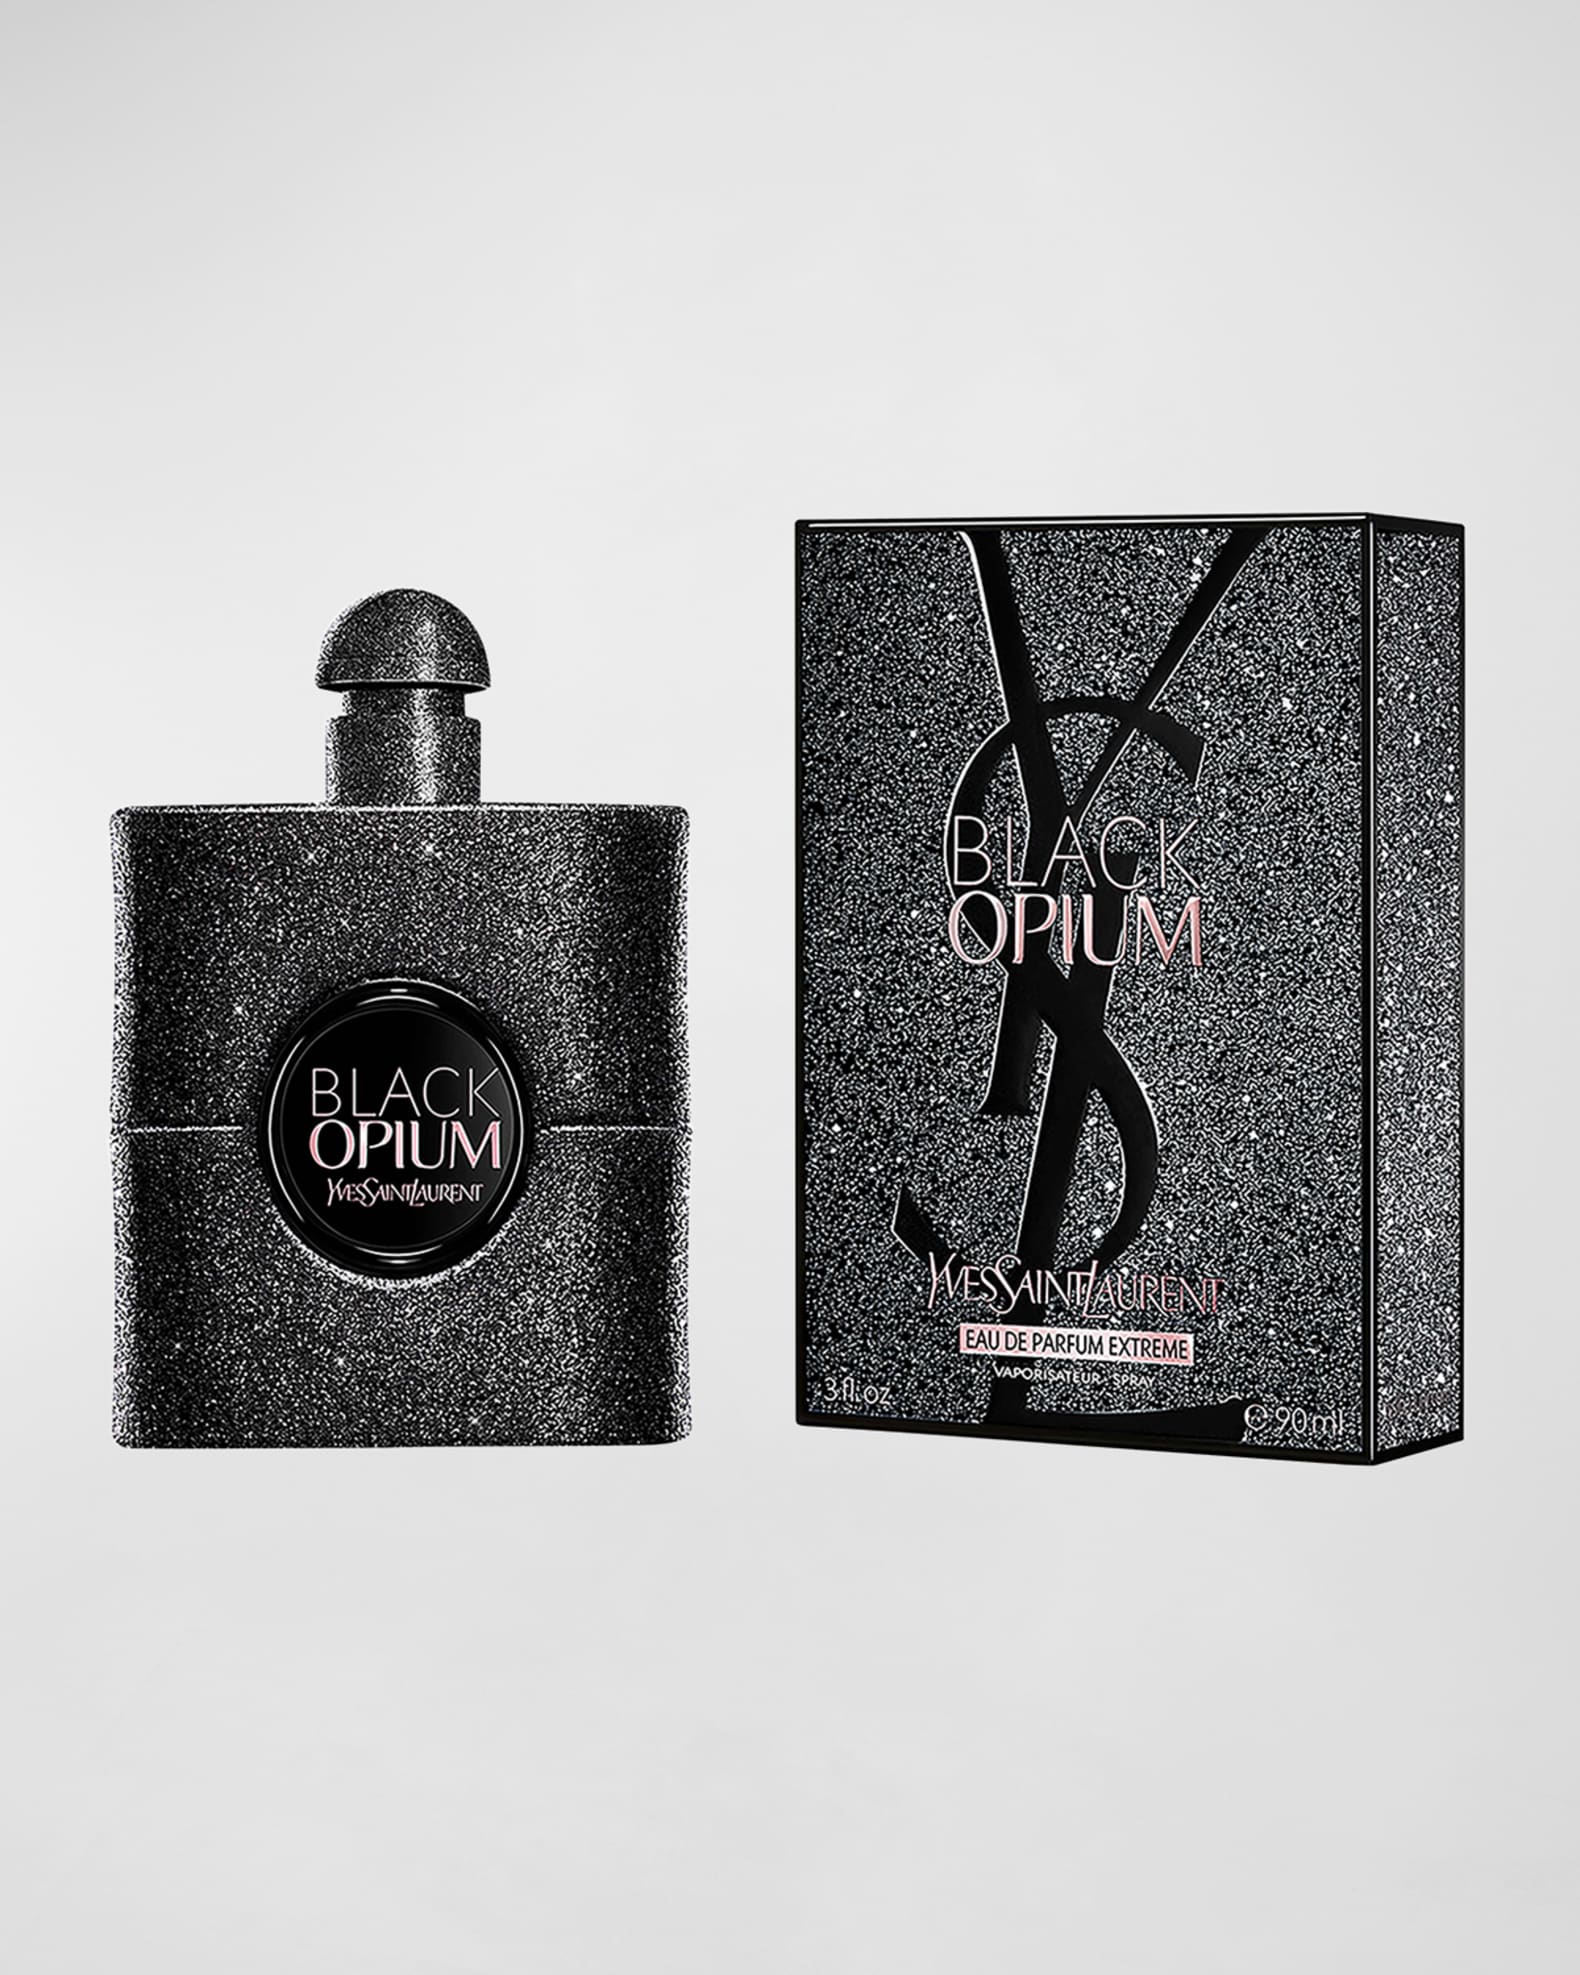 laurent perfume black